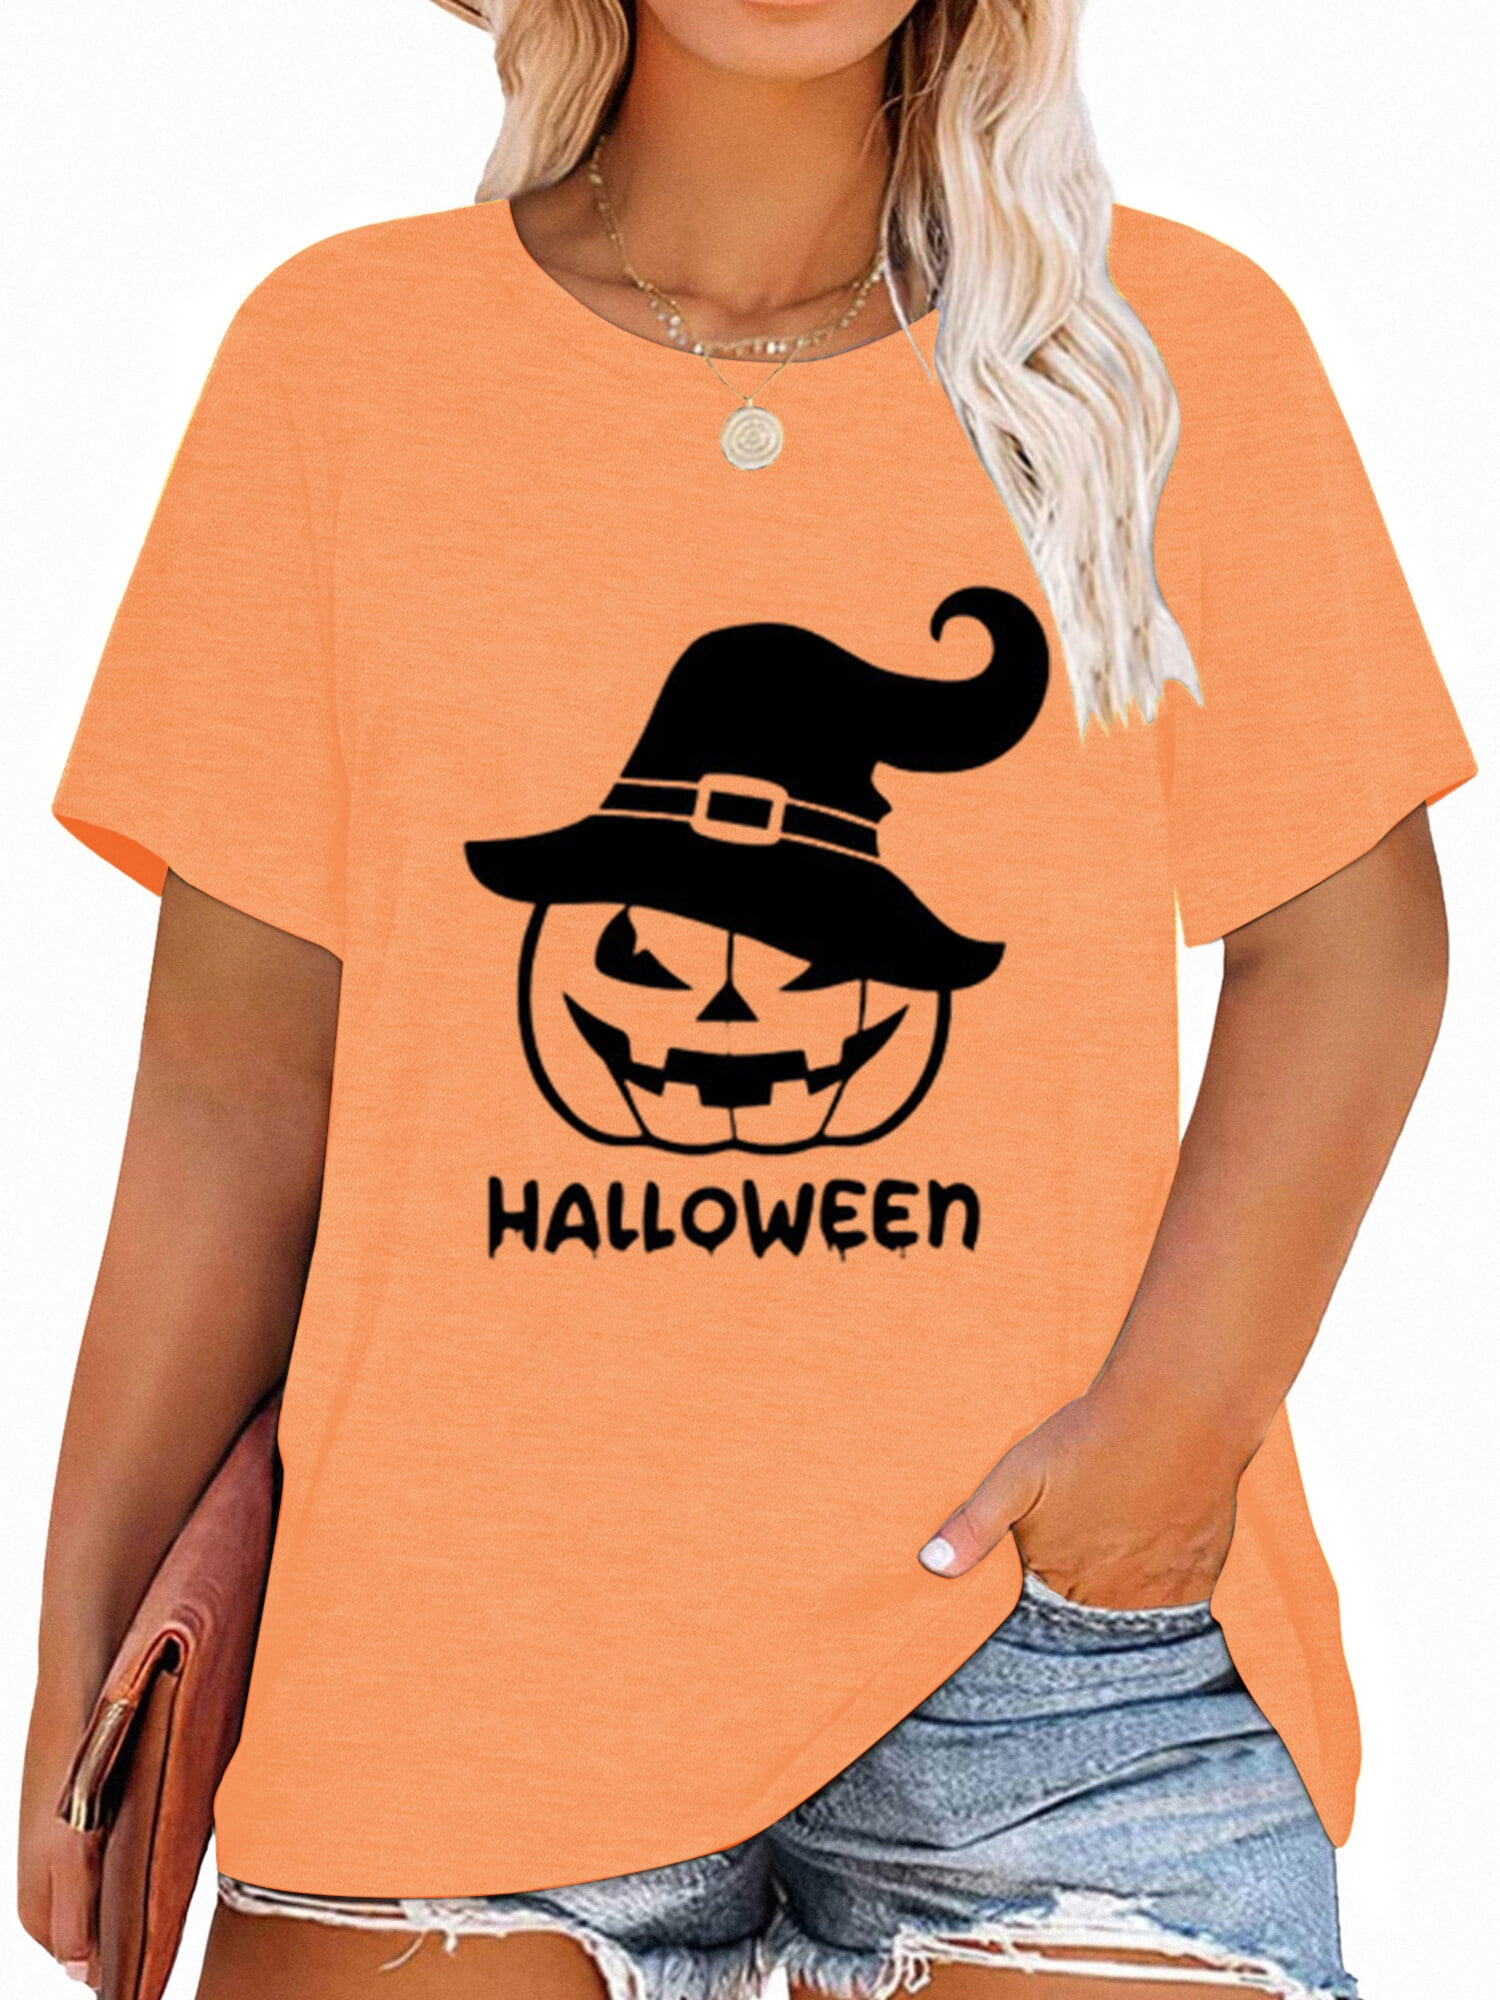 XCHQRTI Halloween Shirts for Women Hocus Pocus Plus Size Tshirt ...